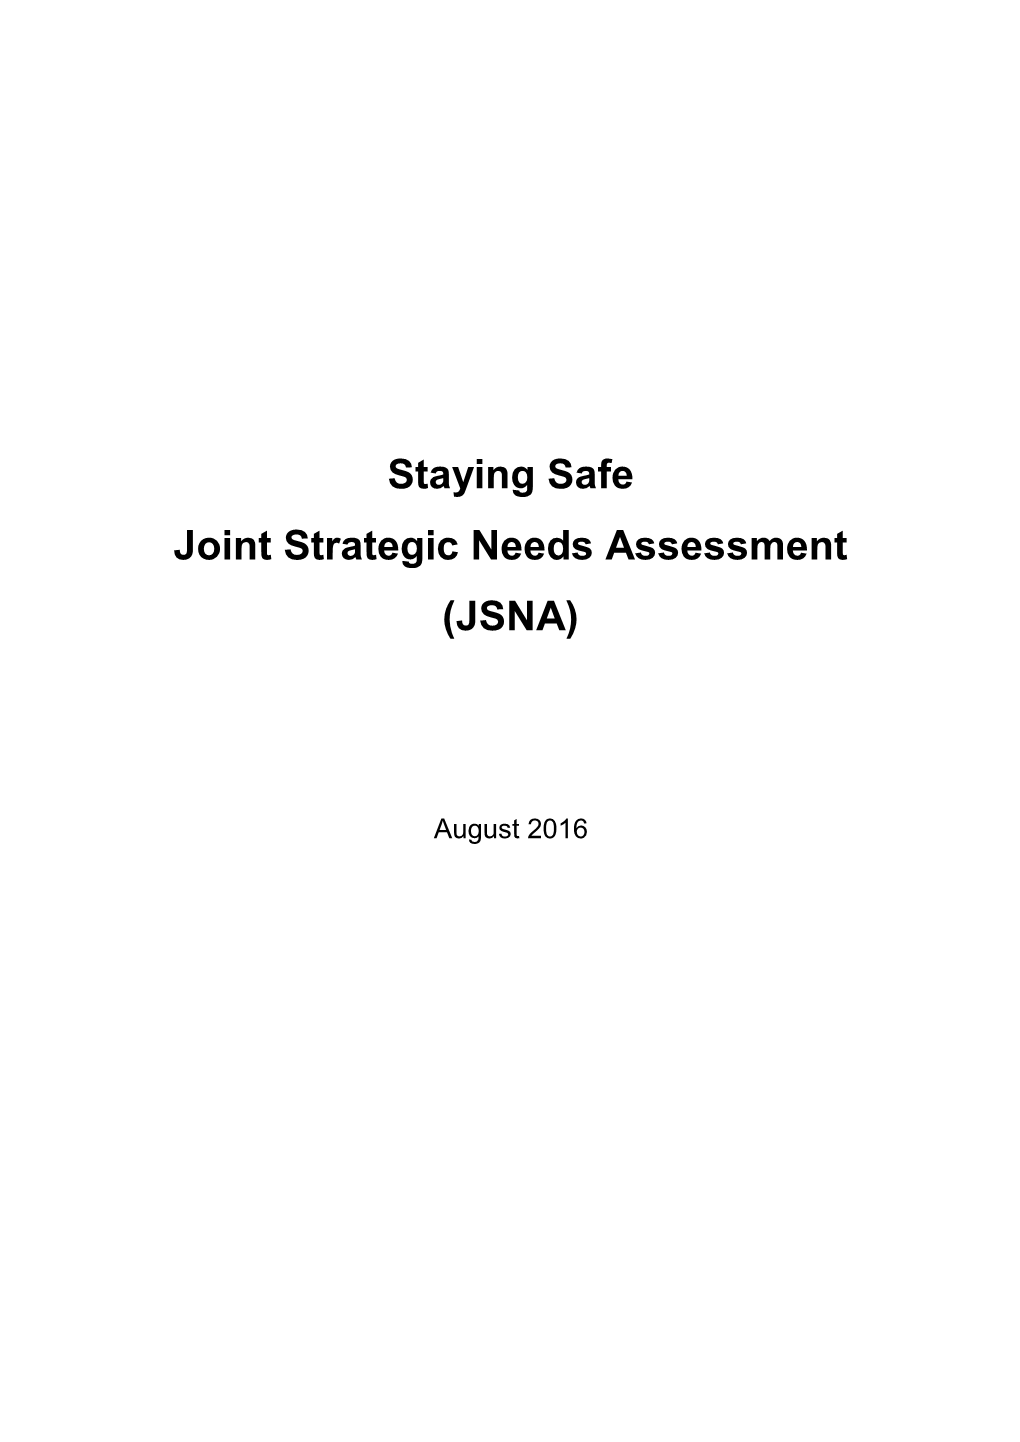 Staying Safe Joint Strategic Needs Assessment (JSNA)